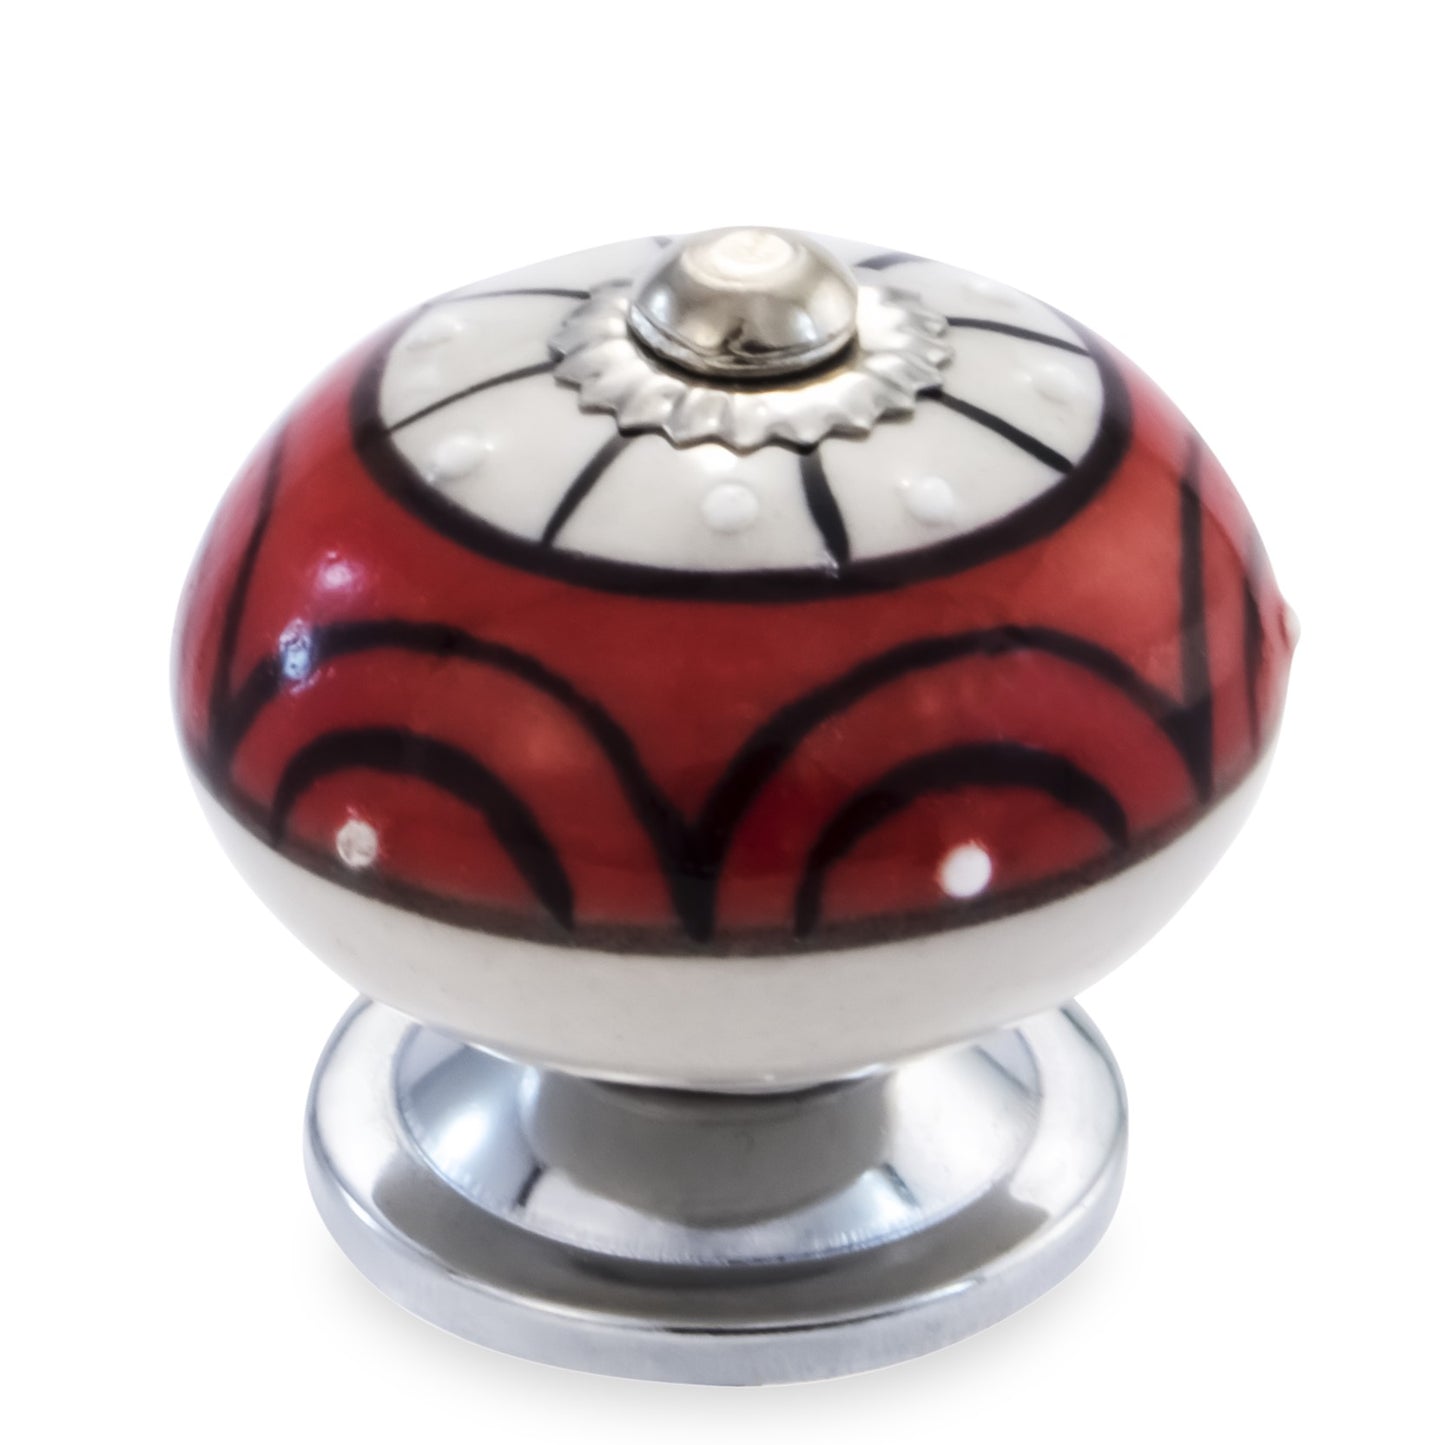 Mascot Hardware Art 1-3/5 in. (40mm) Red & Cream Drawer Cabinet Knob